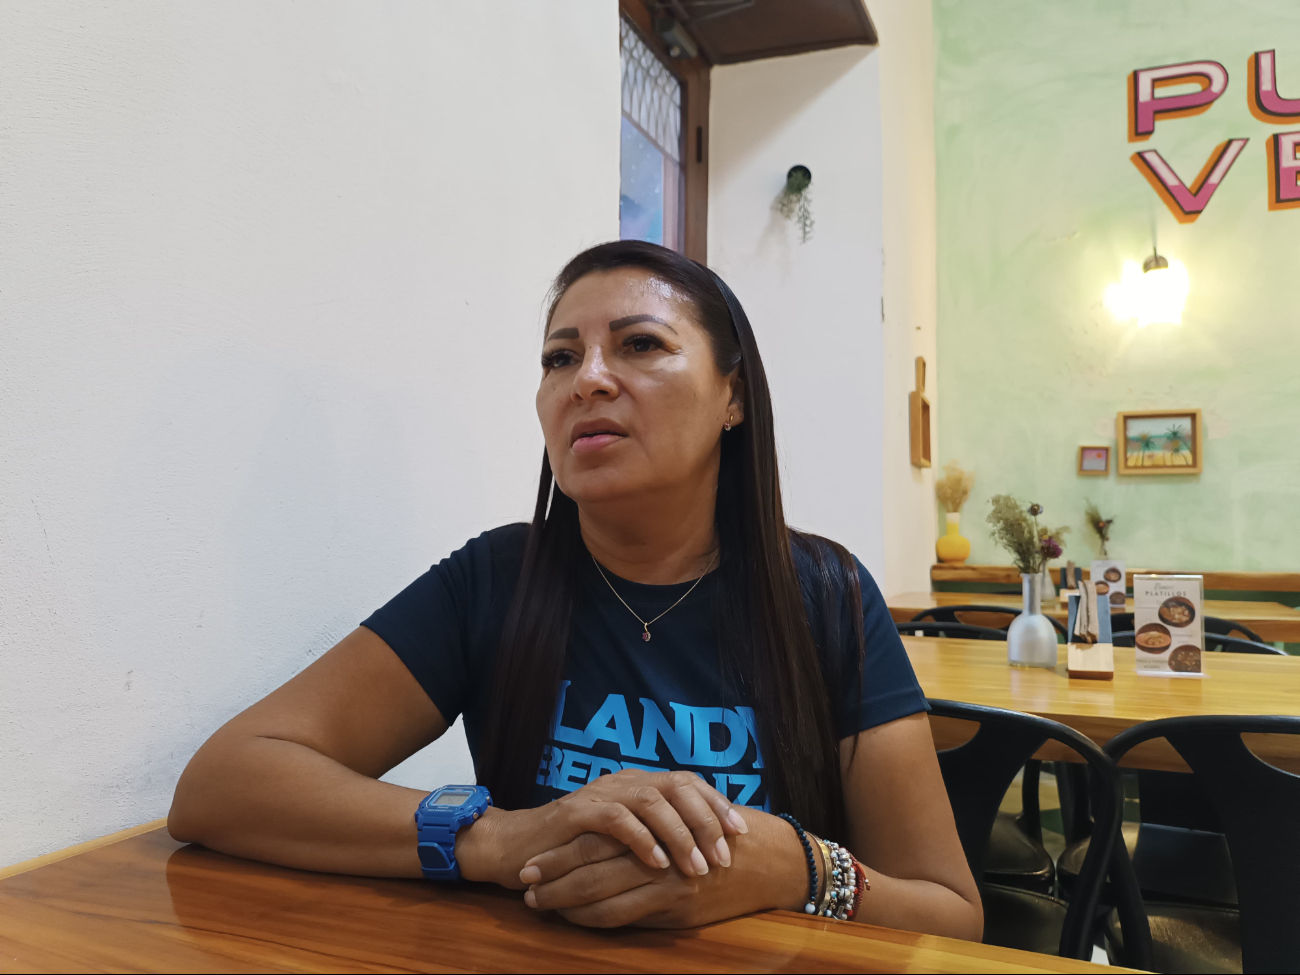 Landy Berzunza, candidata al séptimo distrito de Campeche